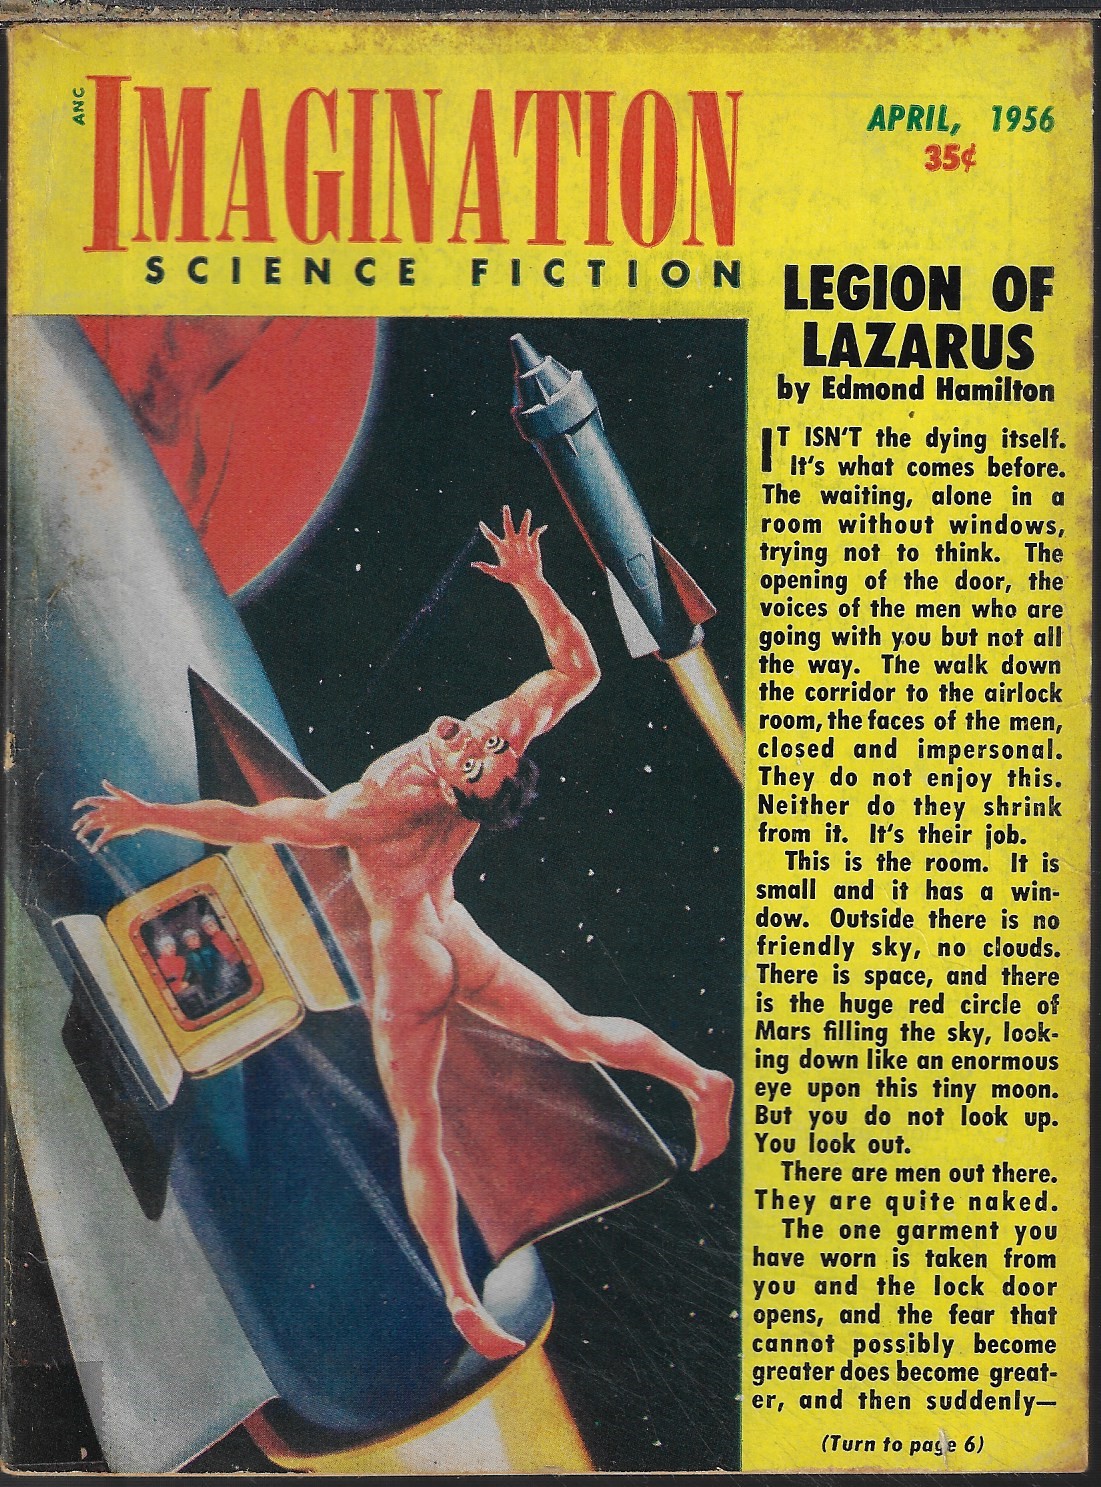 IMAGINATION (EDMOND HAMILTON; MILTON LESSER; DICK PURCELL; PAUL W. FAIRMAN; ALEXANDER BLADE; C. H. THAMES - AKA MILTON LESSER) - Imagination Science Fiction: April, Apr. 1956